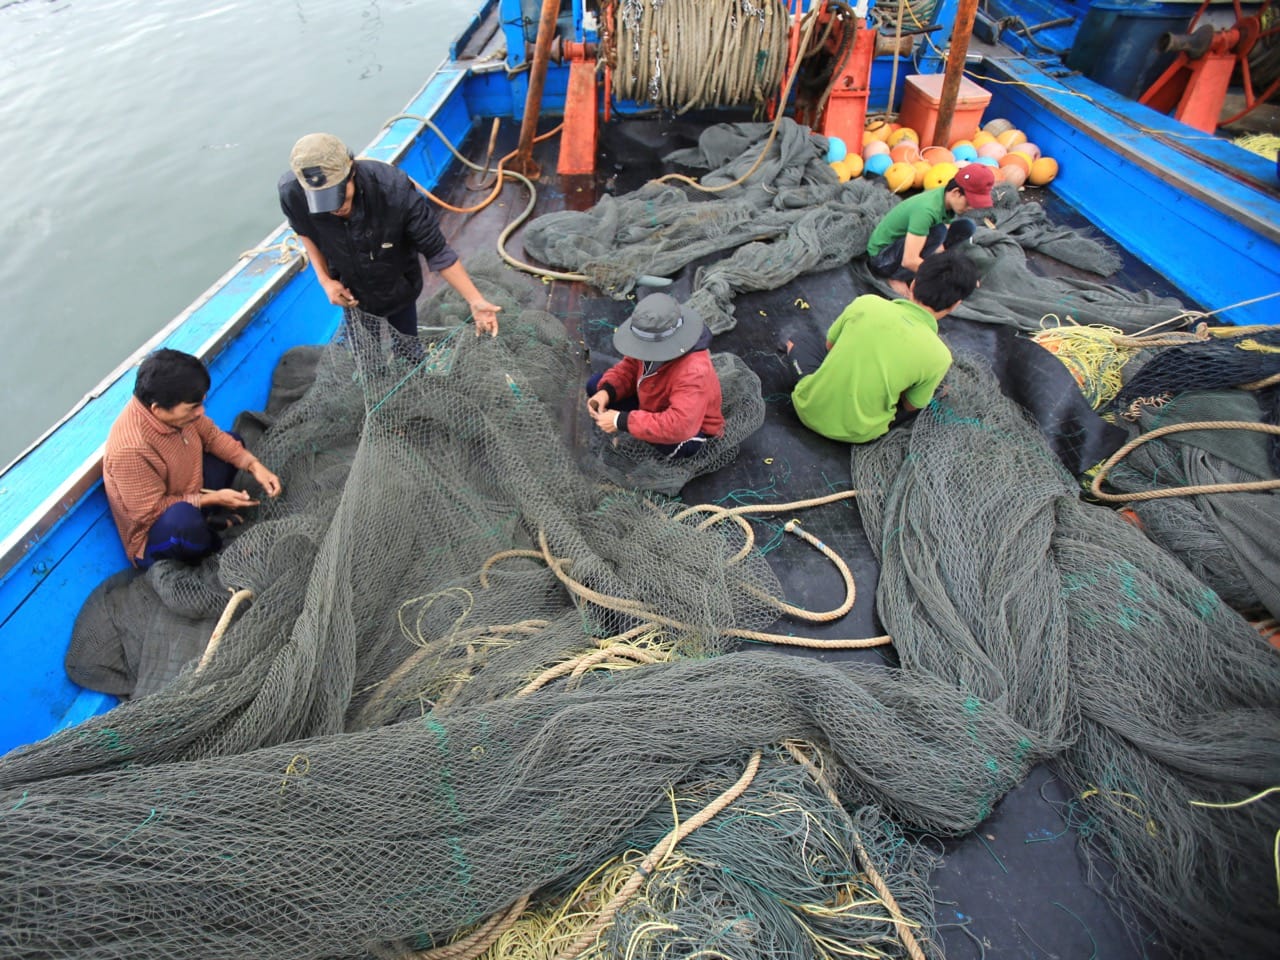 Vietnamese fishermen fix nets on their boat, 27 March 2016, AP Photo/Hau Dinh